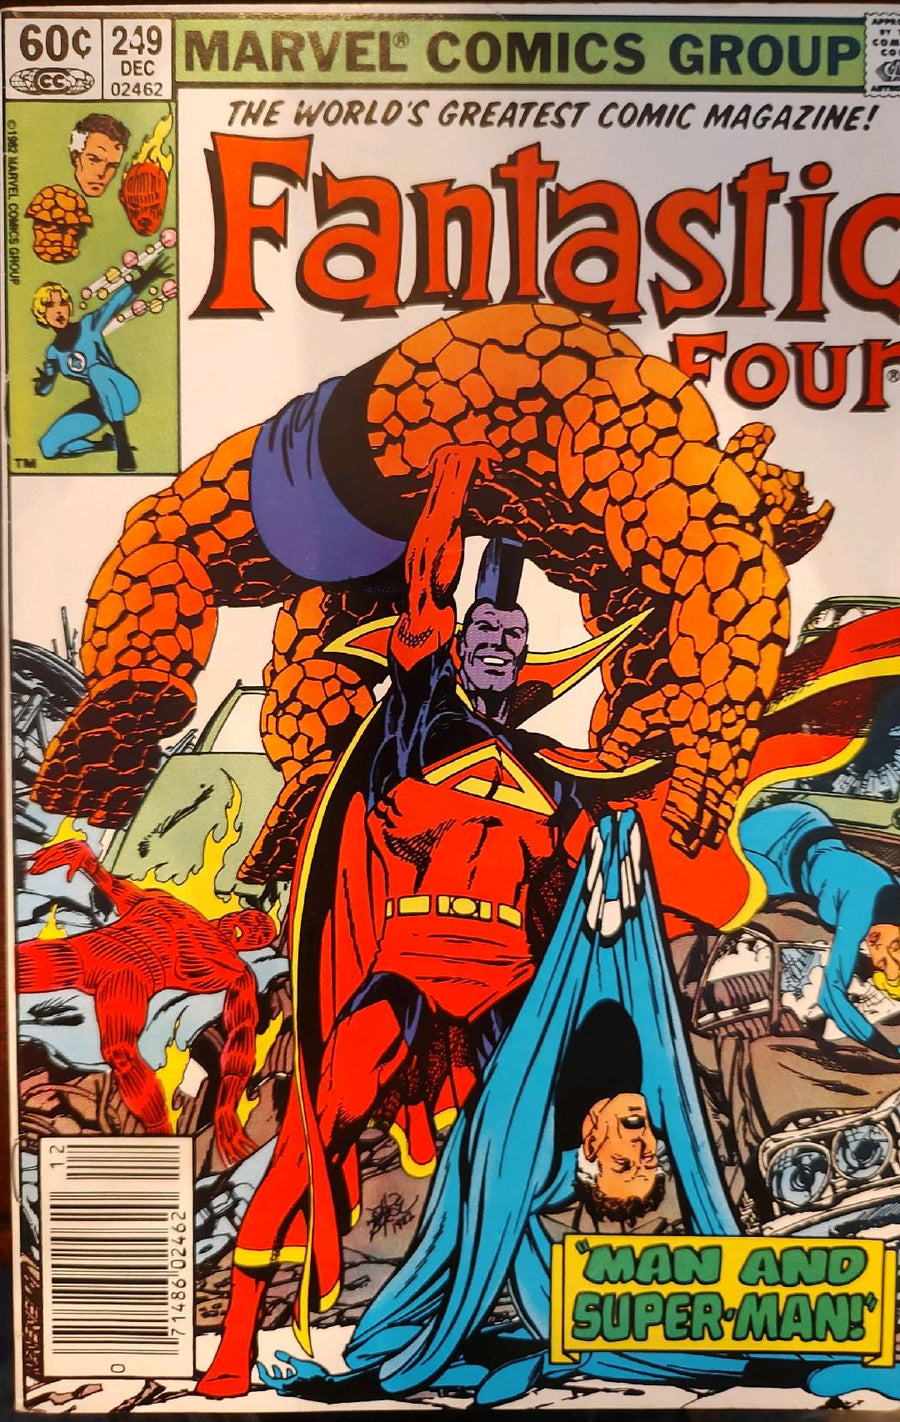 Fantastic Four #249 Comic Book Cover